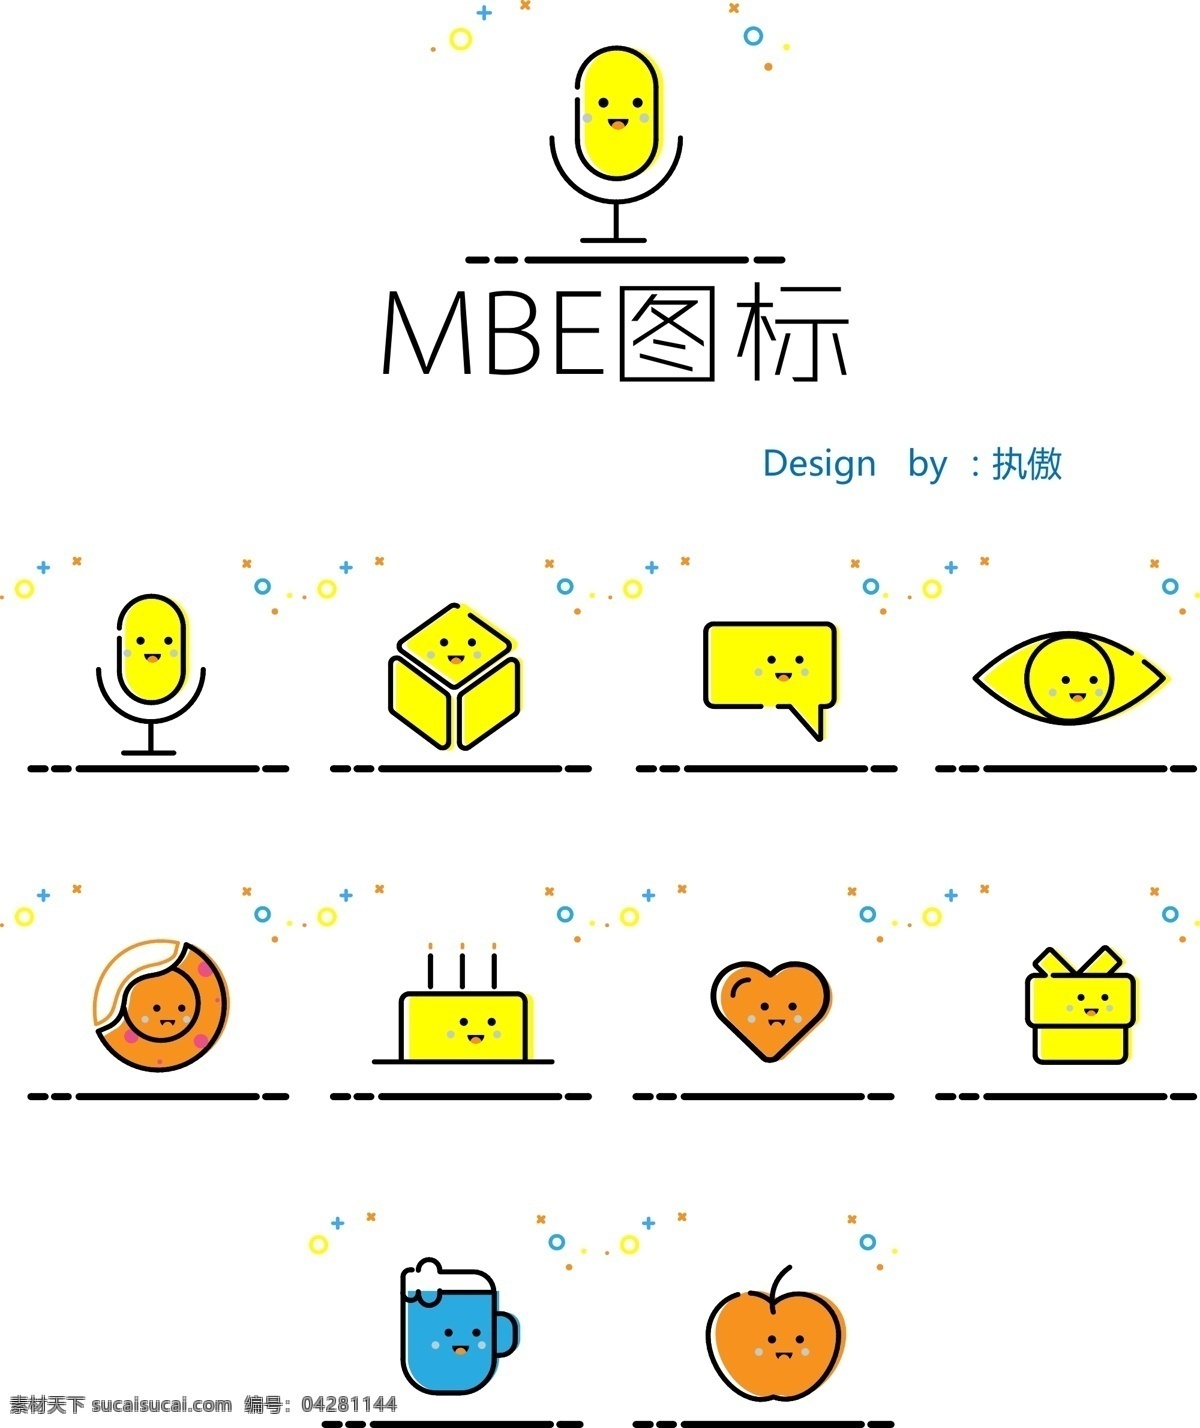 mbe 图标 模板 风格 卡通 简约 扁平 可爱 标志